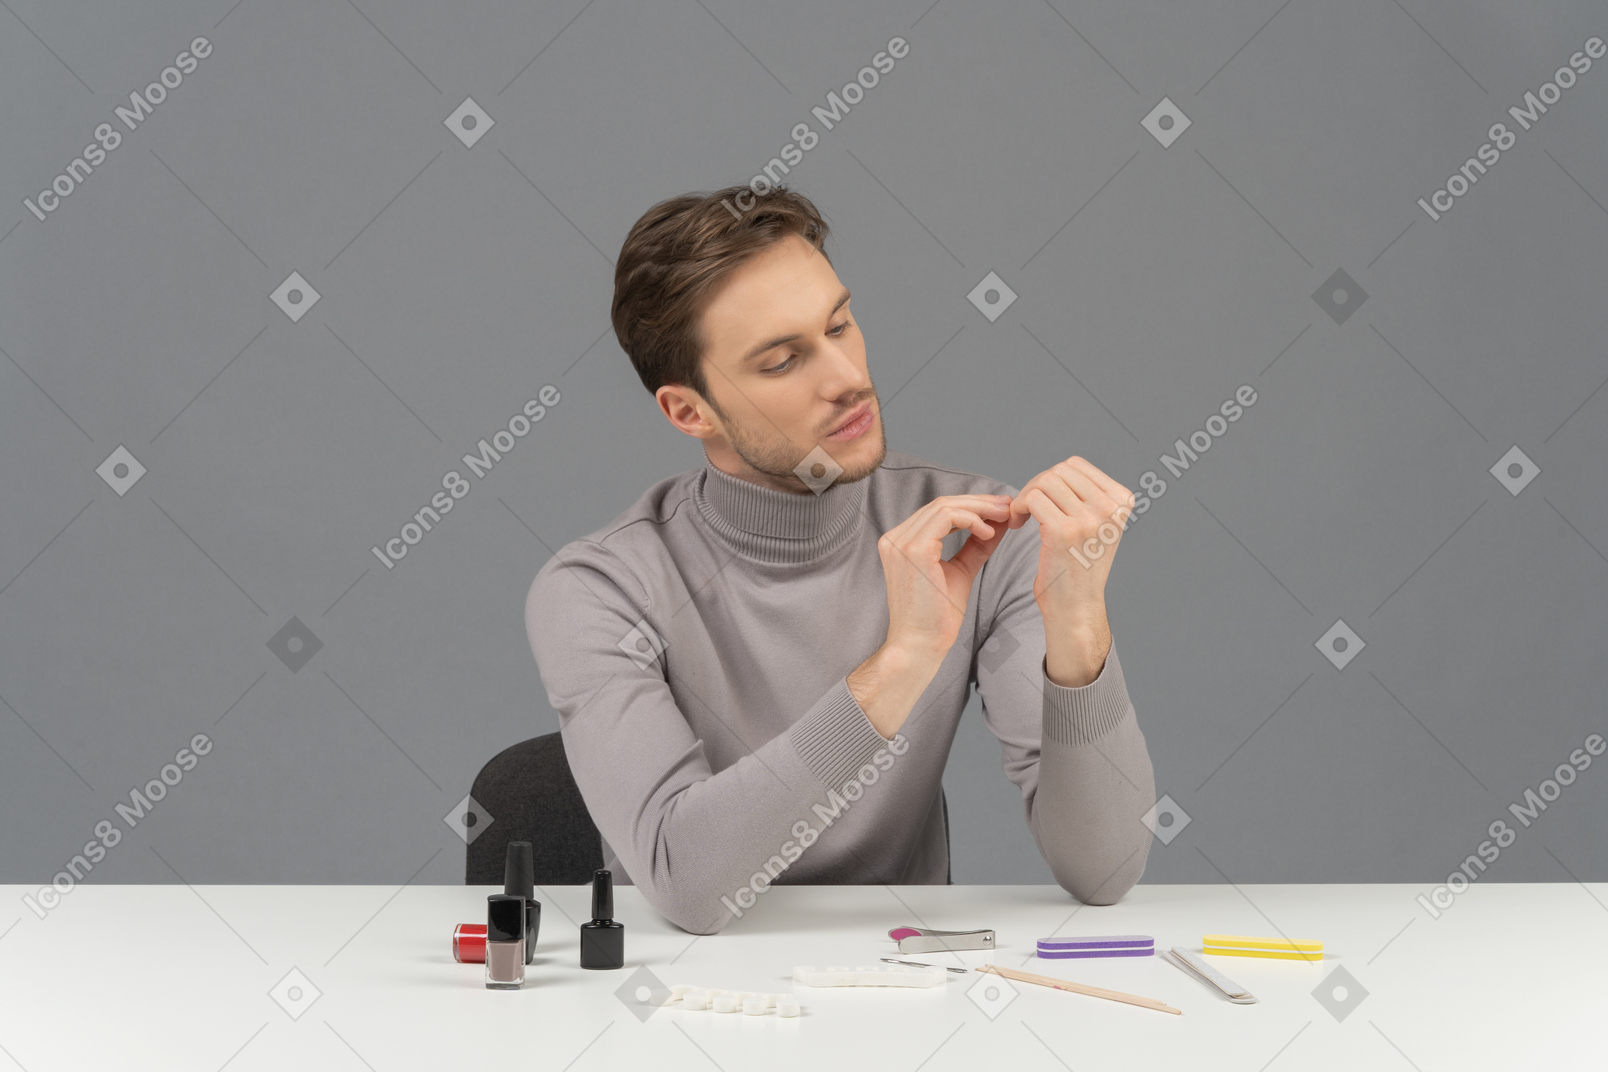 A serious young man arranging his nails